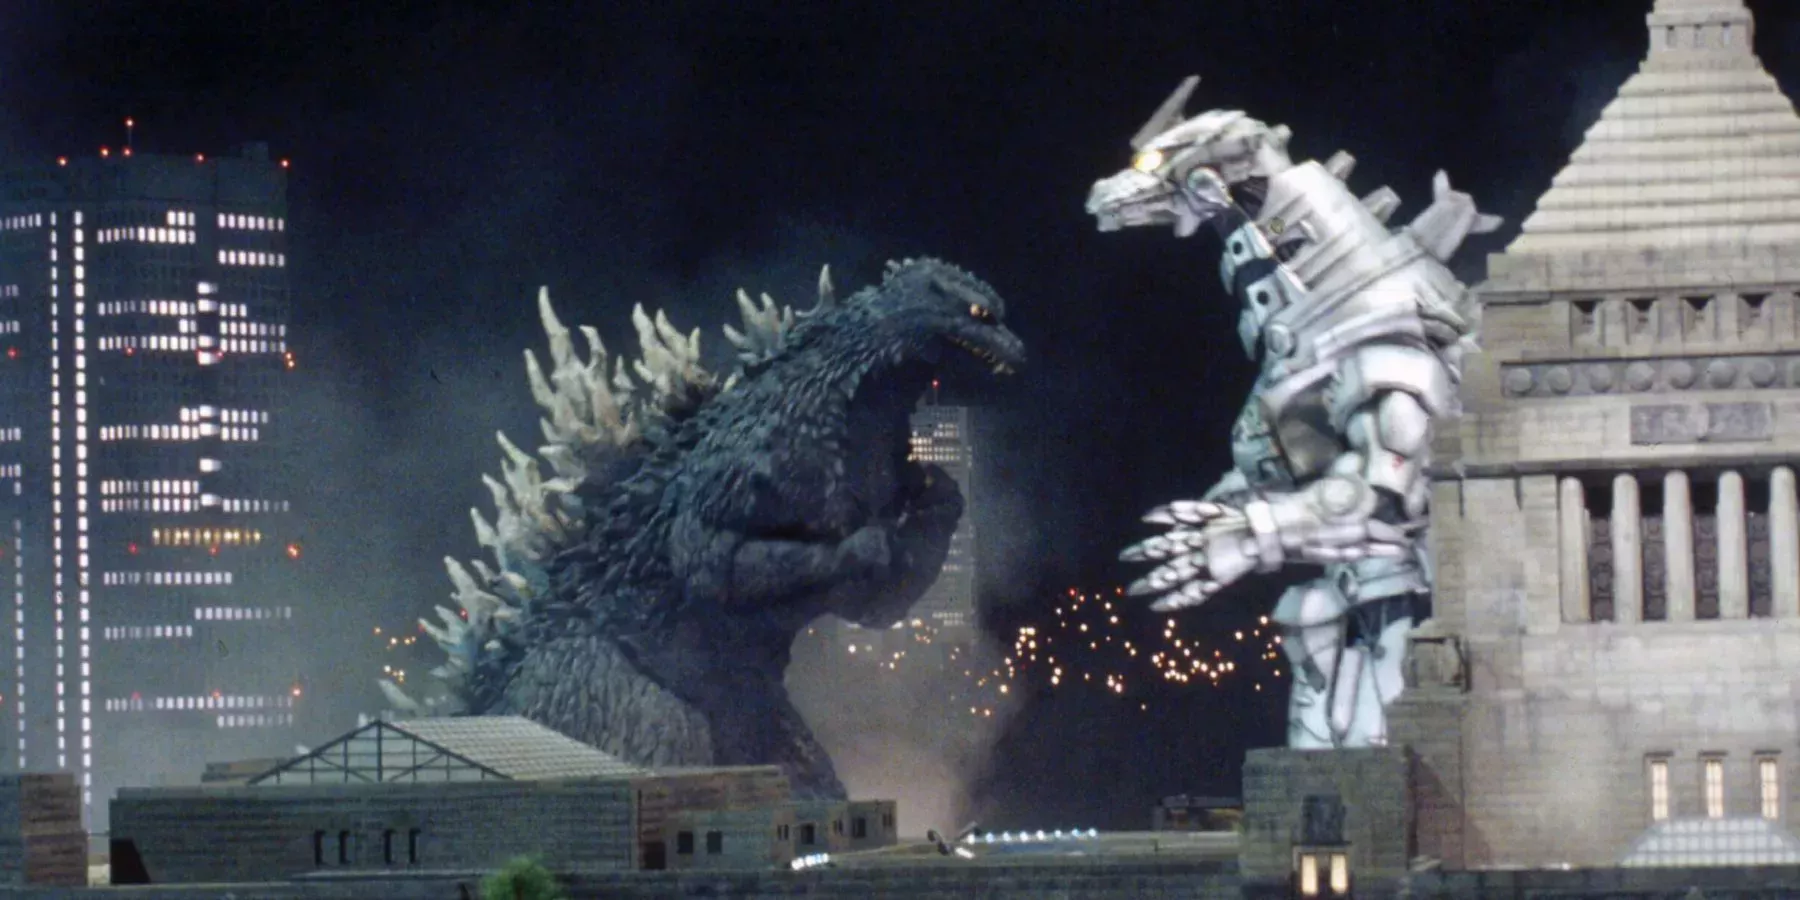 Godzilla squares up to Mechagodzilla in Godzilla: Tokyo S.O.S.